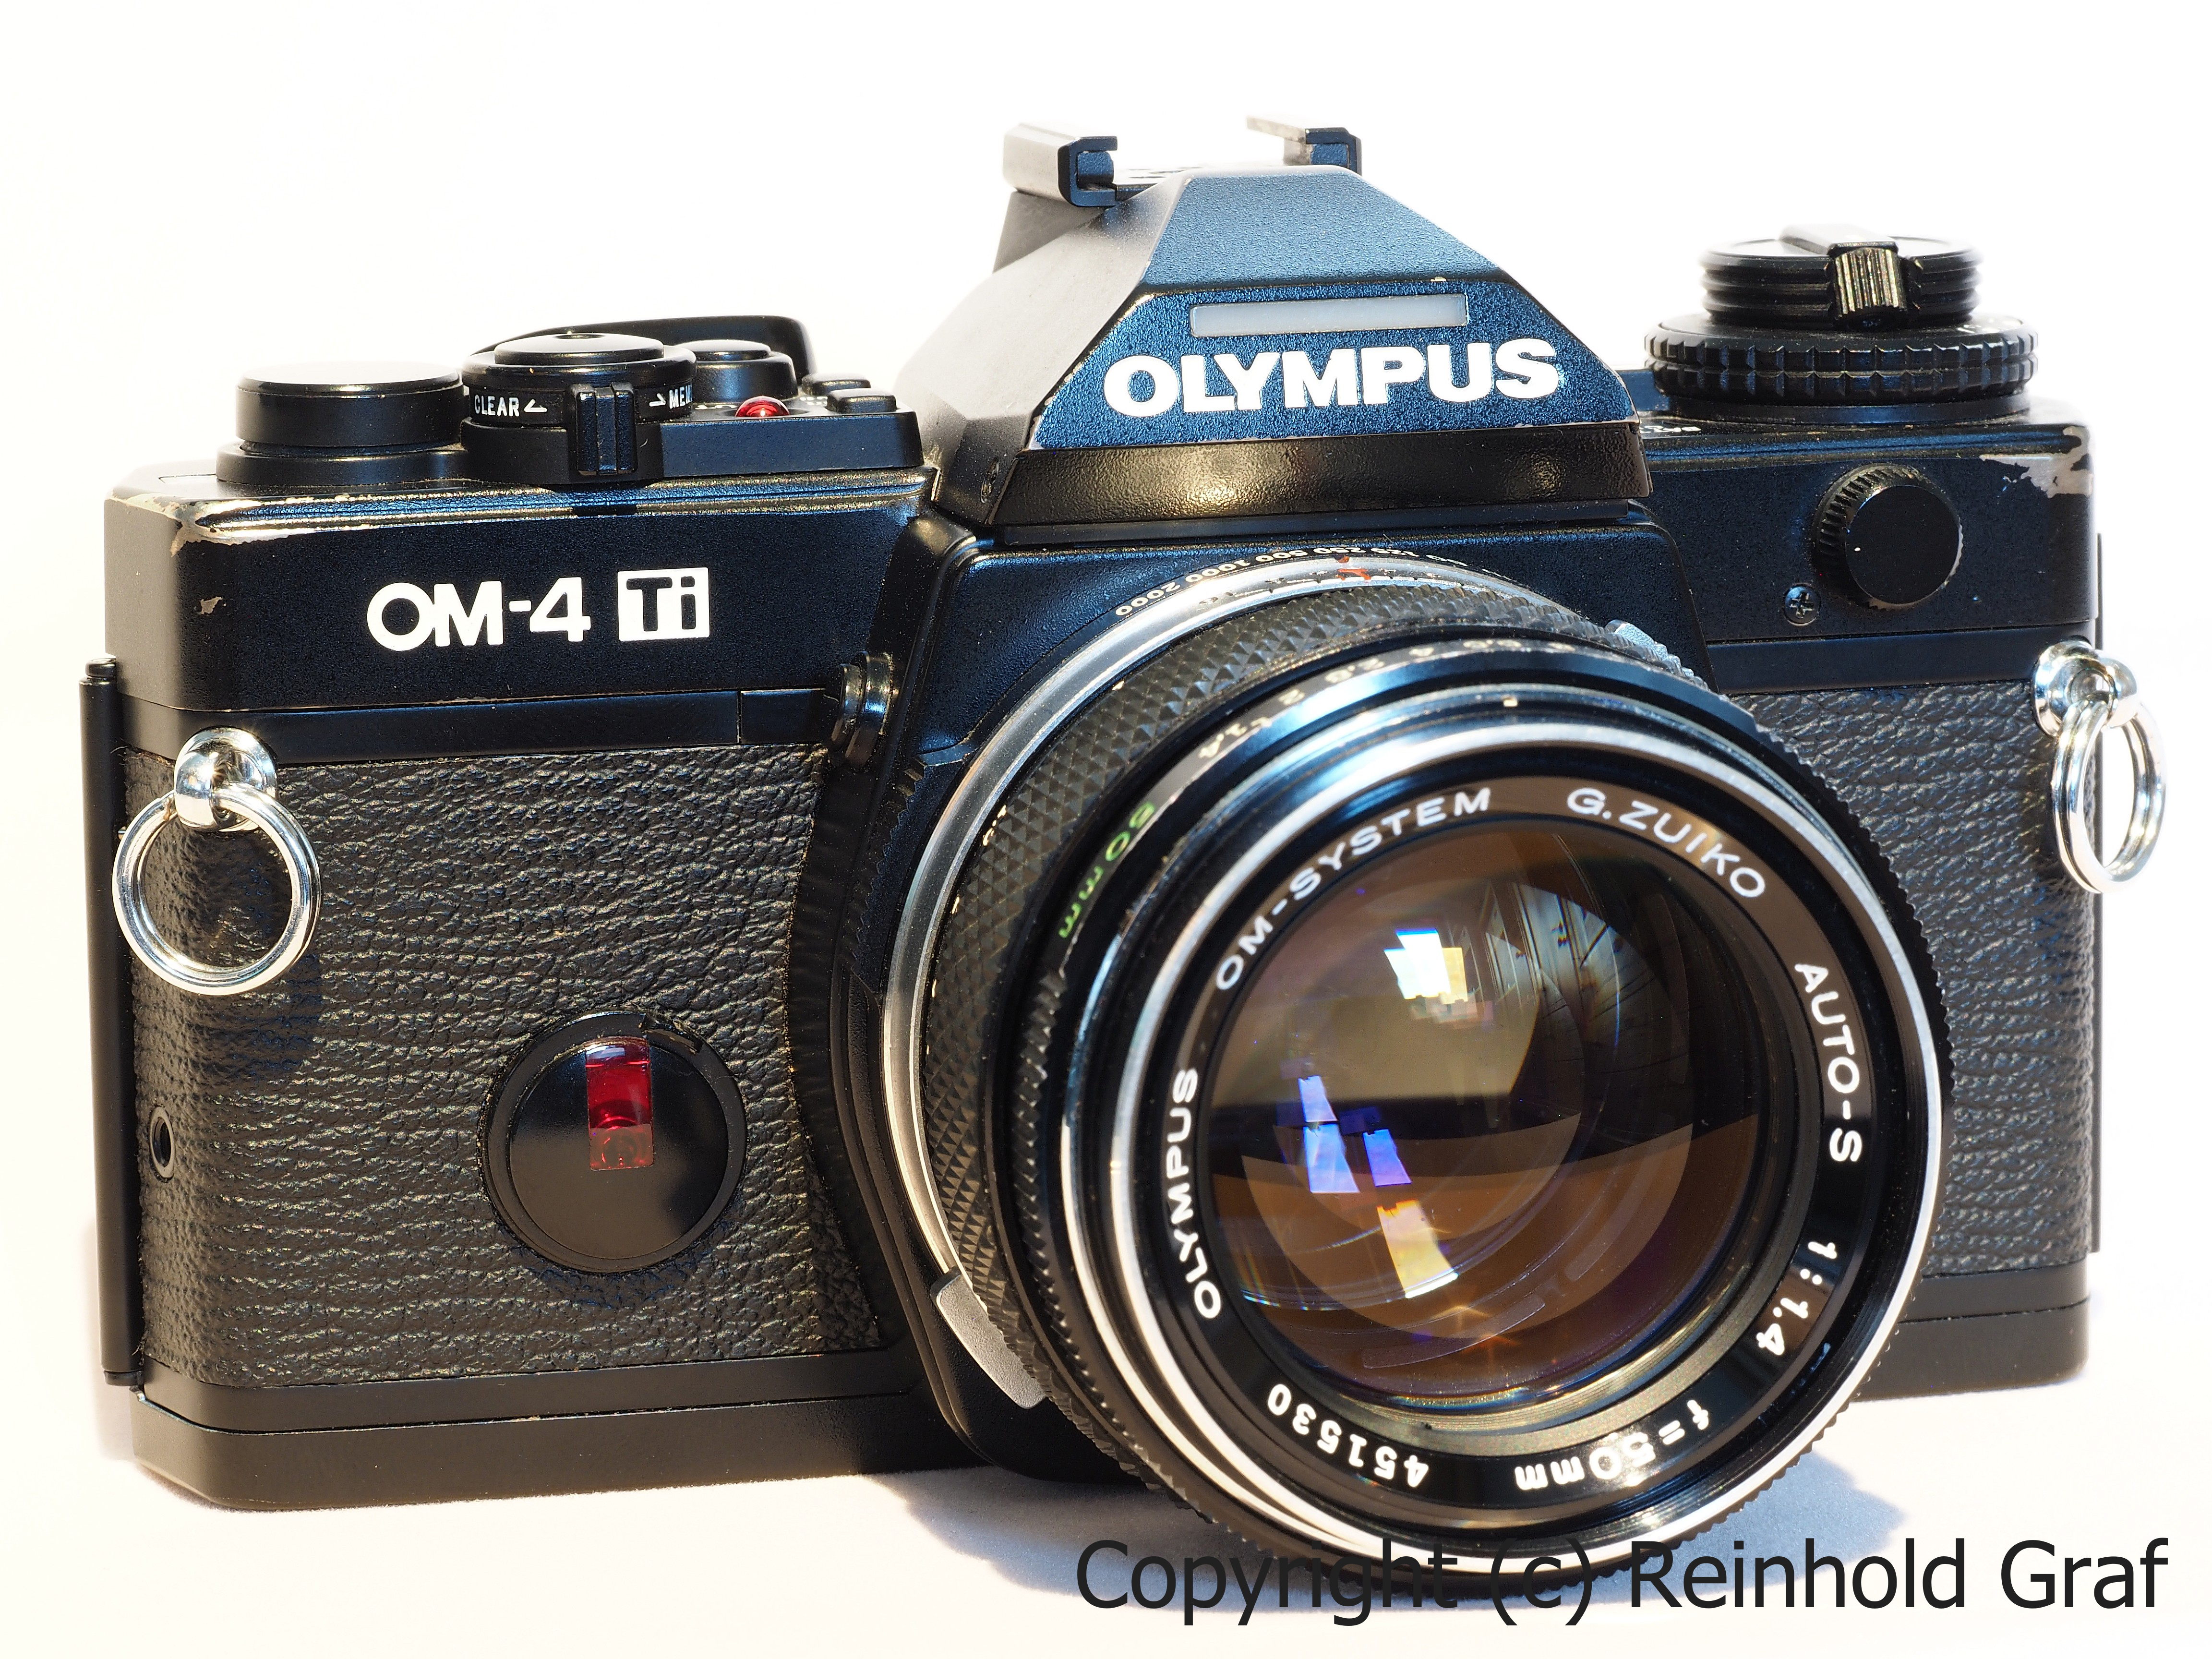 Olympus OM-4Ti and Ricoh GR II – reCap